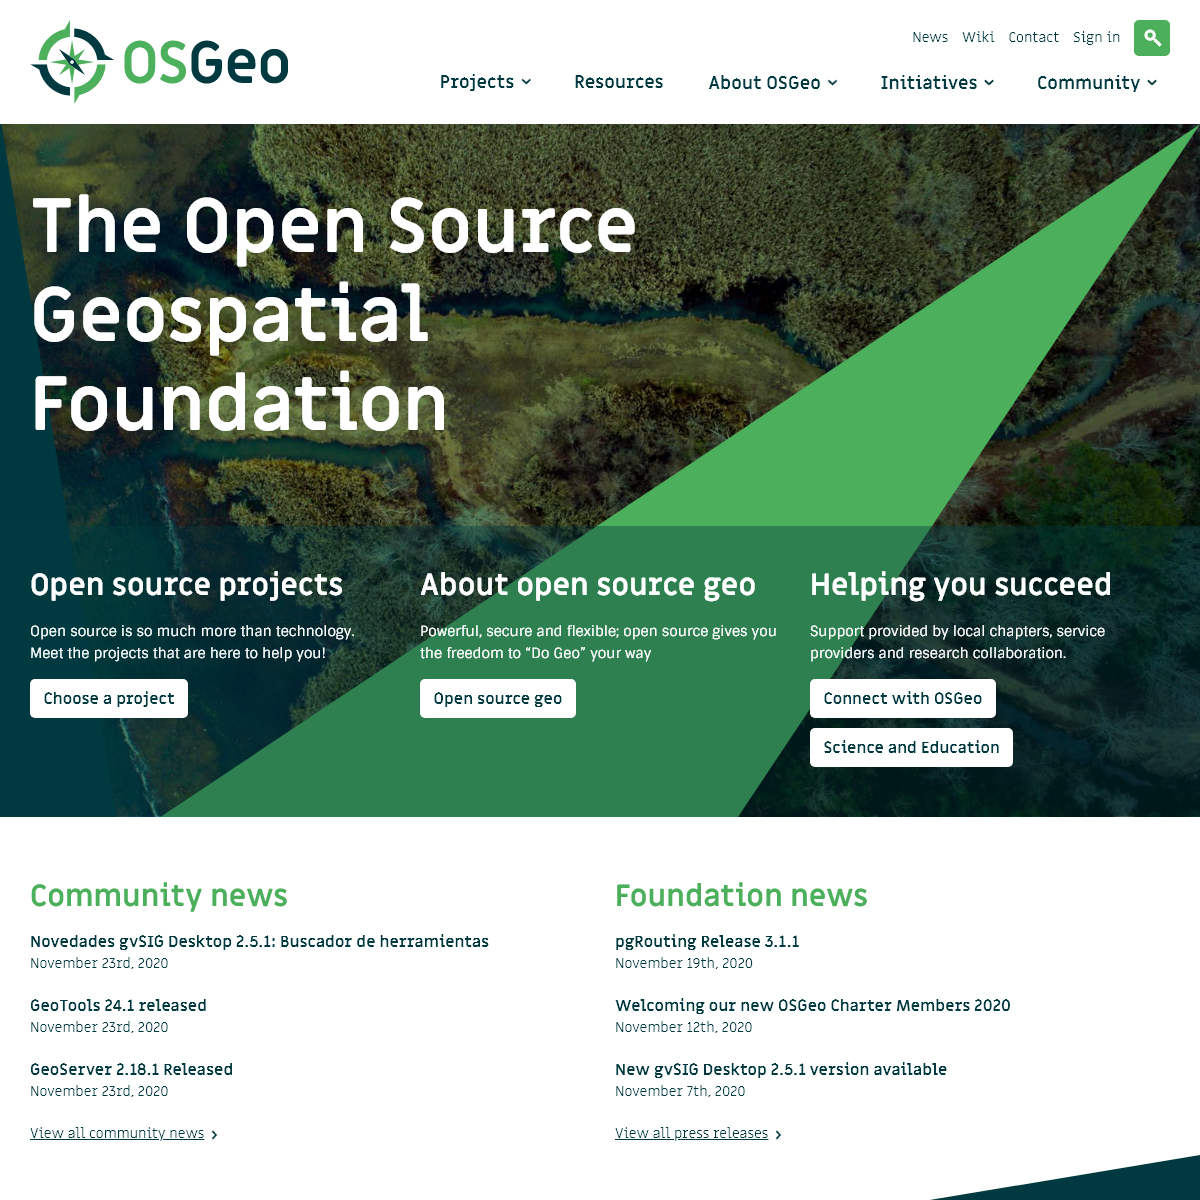 A complete backup of osgeo.org